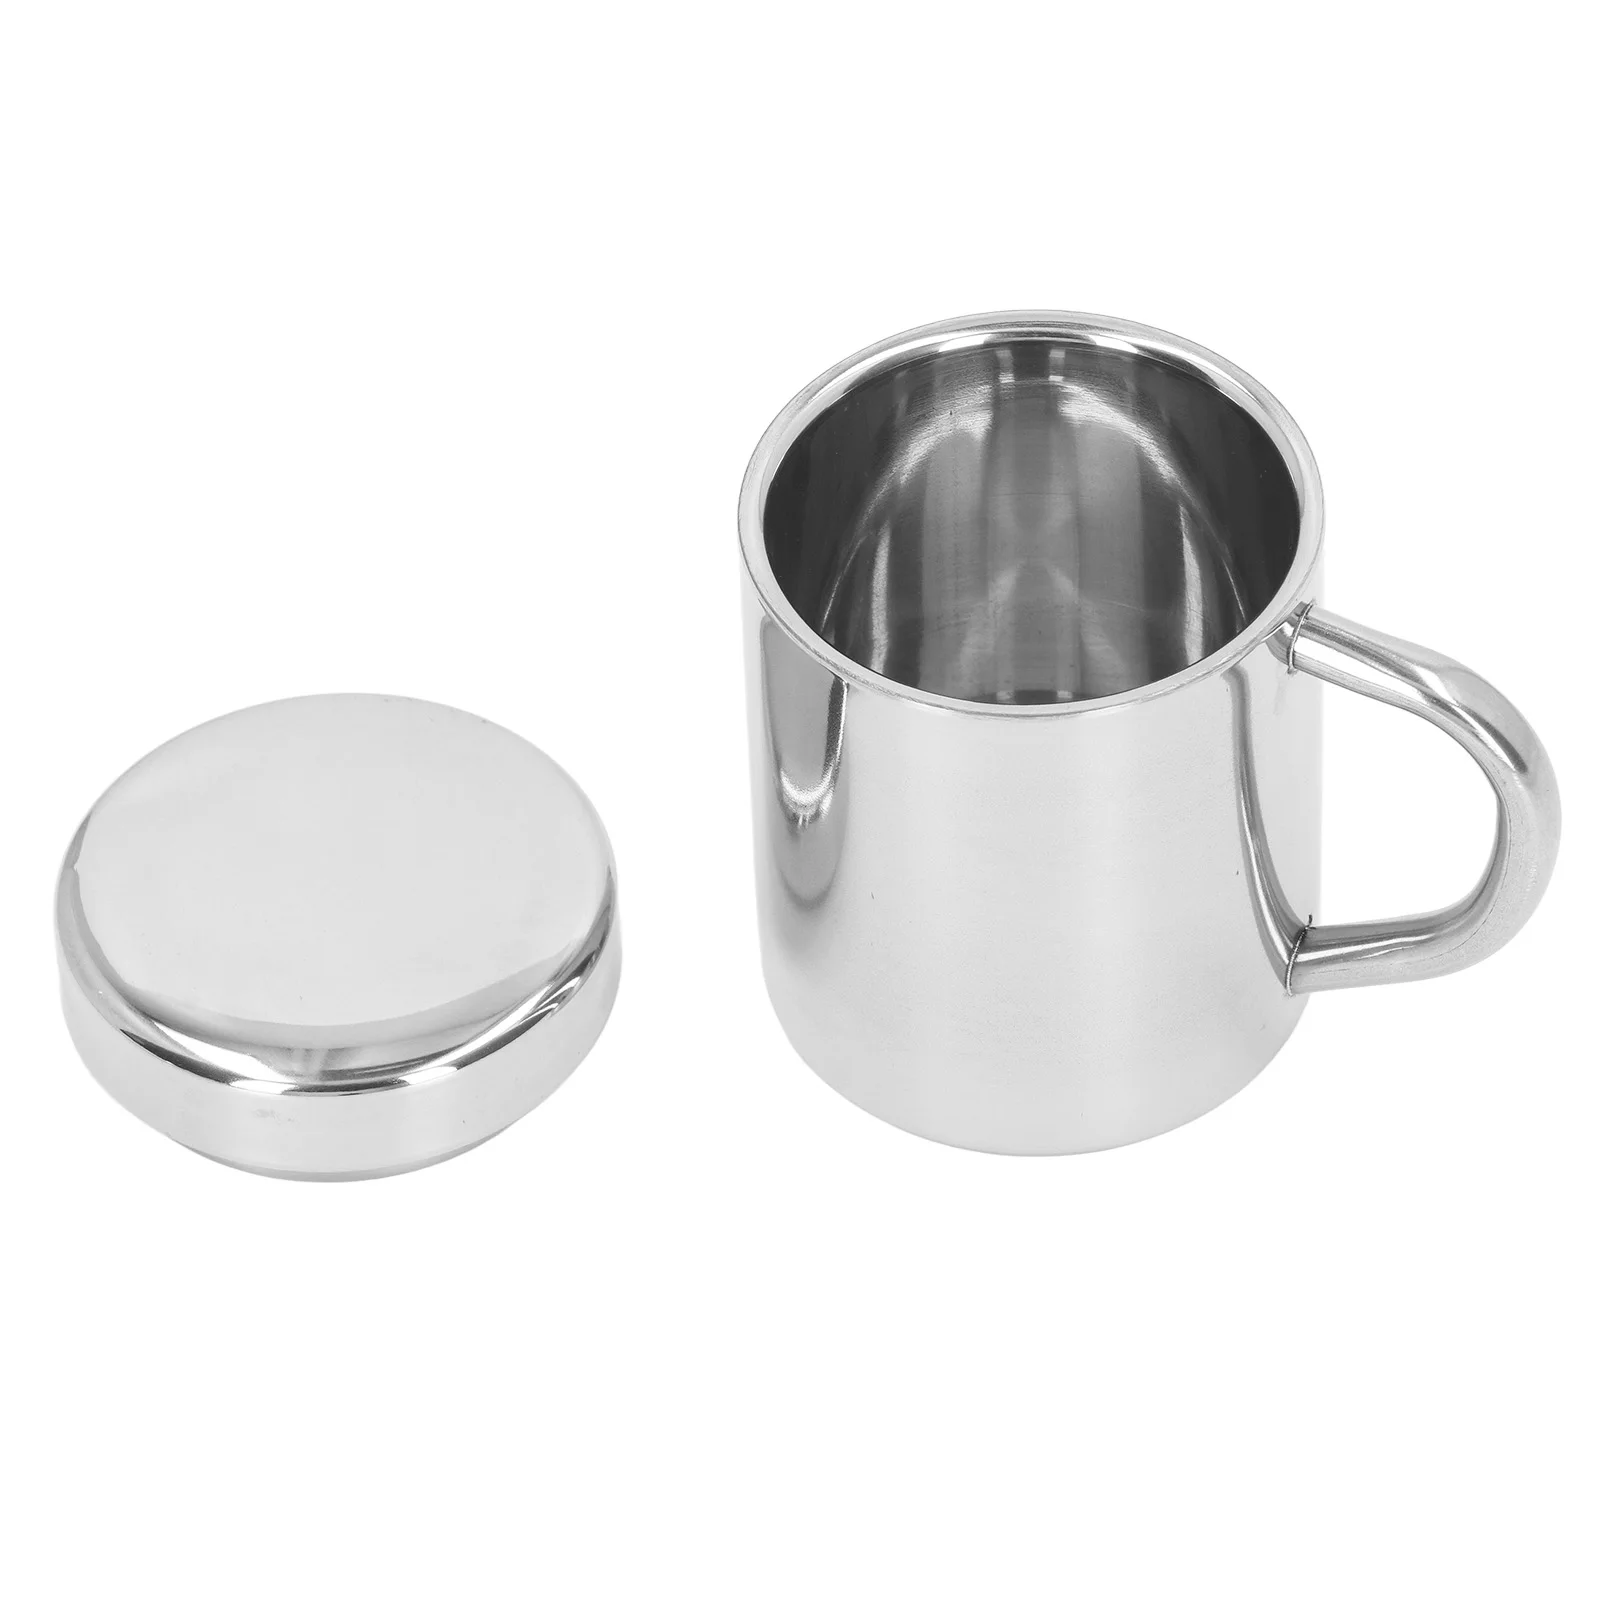 https://ae01.alicdn.com/kf/Sf982aceb3ea043b6a73264876b01d1a2G/Insulated-Coffee-Mug-Stainless-Steel-Double-Walled-Mugs-Shatterproof-Warm-Cold-Use-Tea-Cups-with-Handle.jpg